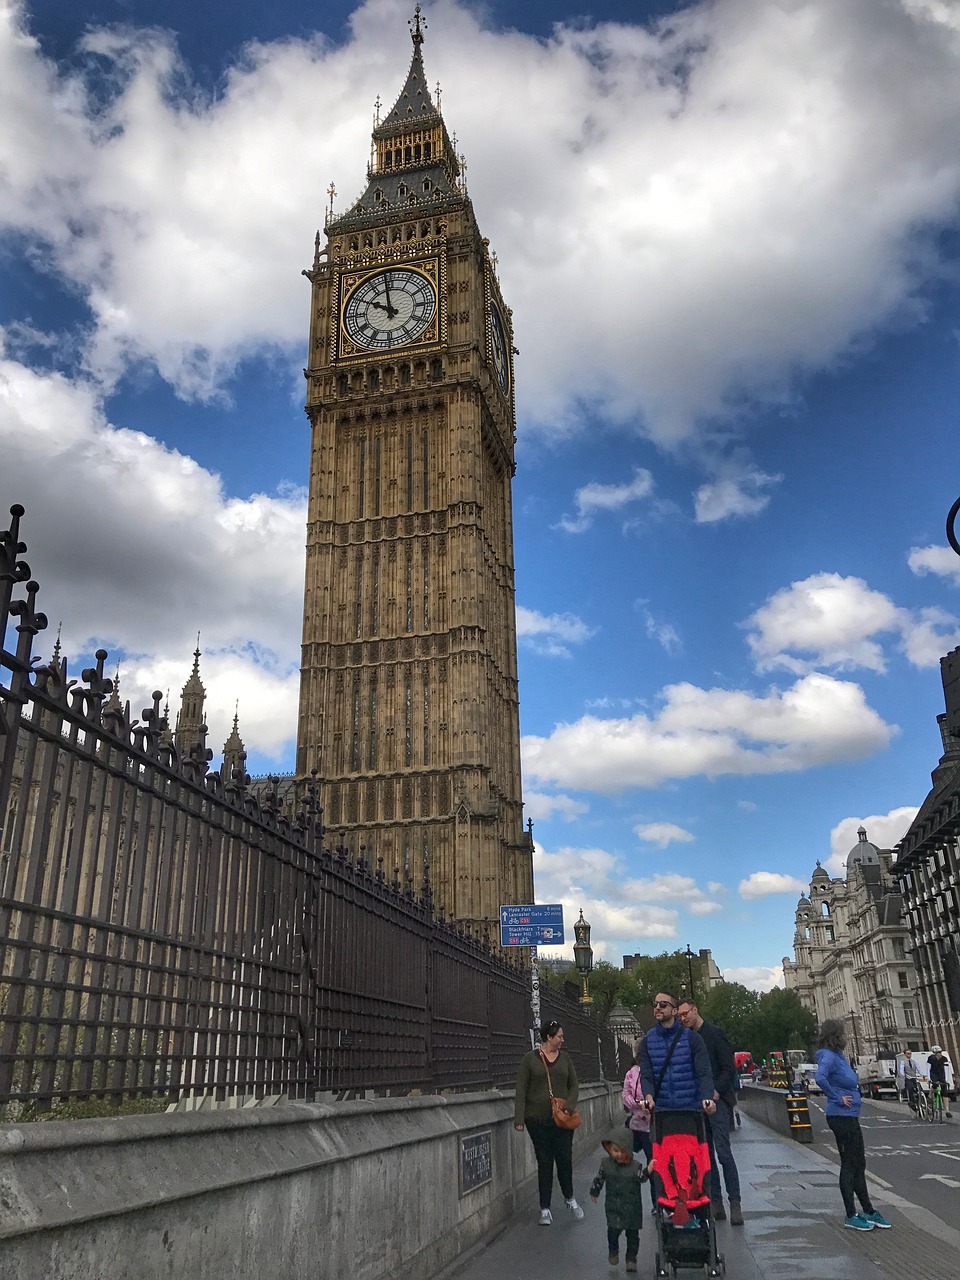 Биг башня в лондоне. Башня Биг Бен в Лондоне. Биг-Бен (башня Елизаветы). Часы Биг Бен в Лондоне. Биг Бэн часы в Англии.